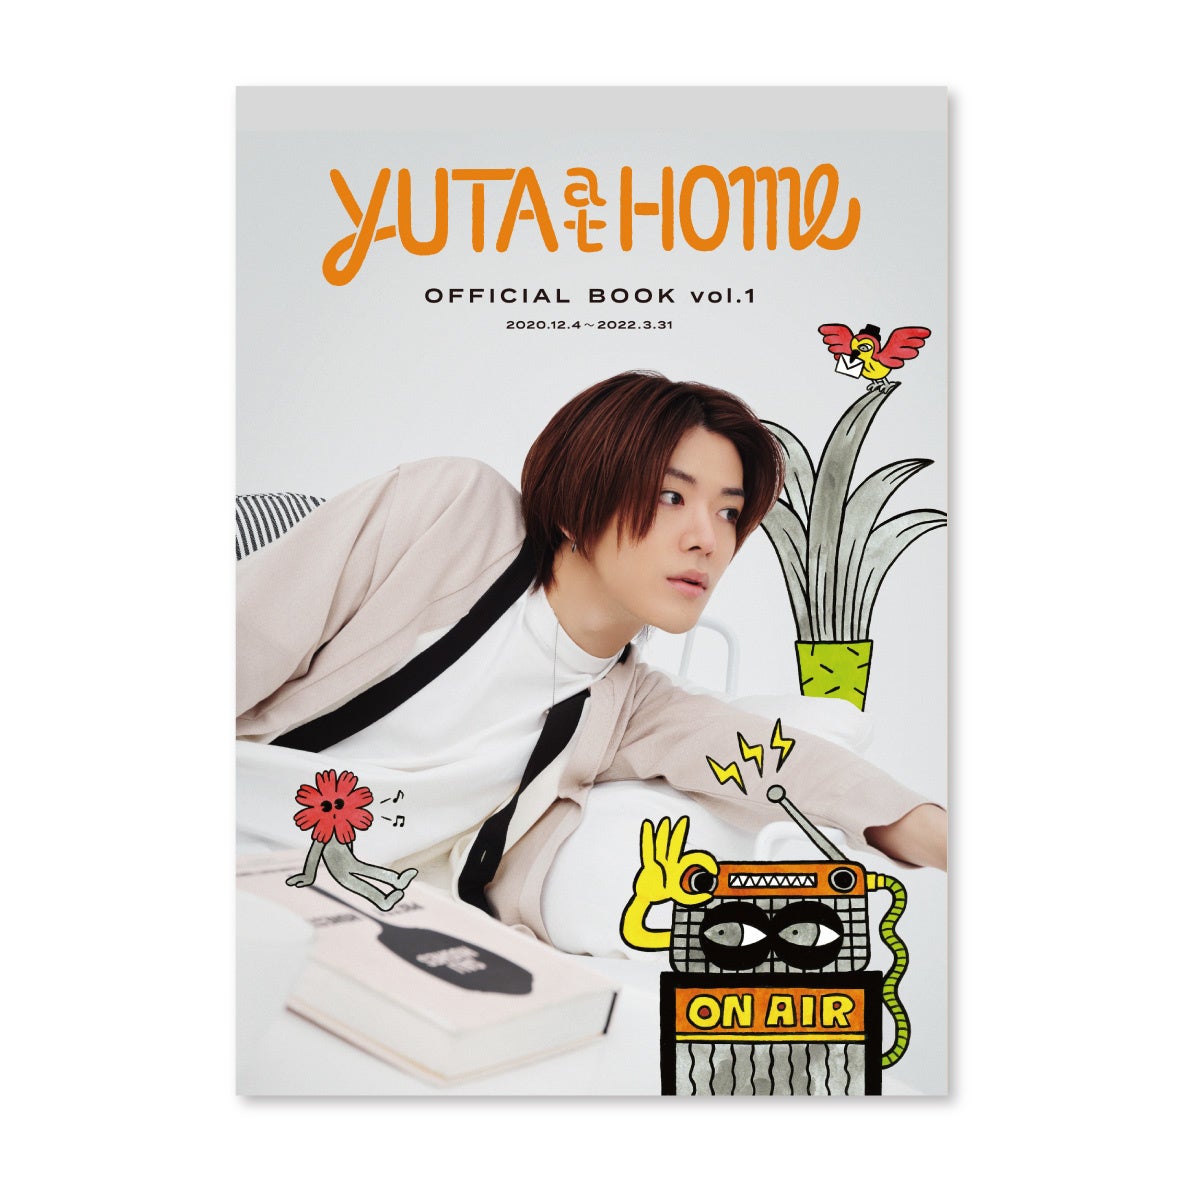 JFN系列17局ネット「NCT 127 ユウタのYUTA at Home」の1周年を記念したラジオ番組公式ブック『YUTA at Home OFFICIAL BOOK vol.1』発売決定